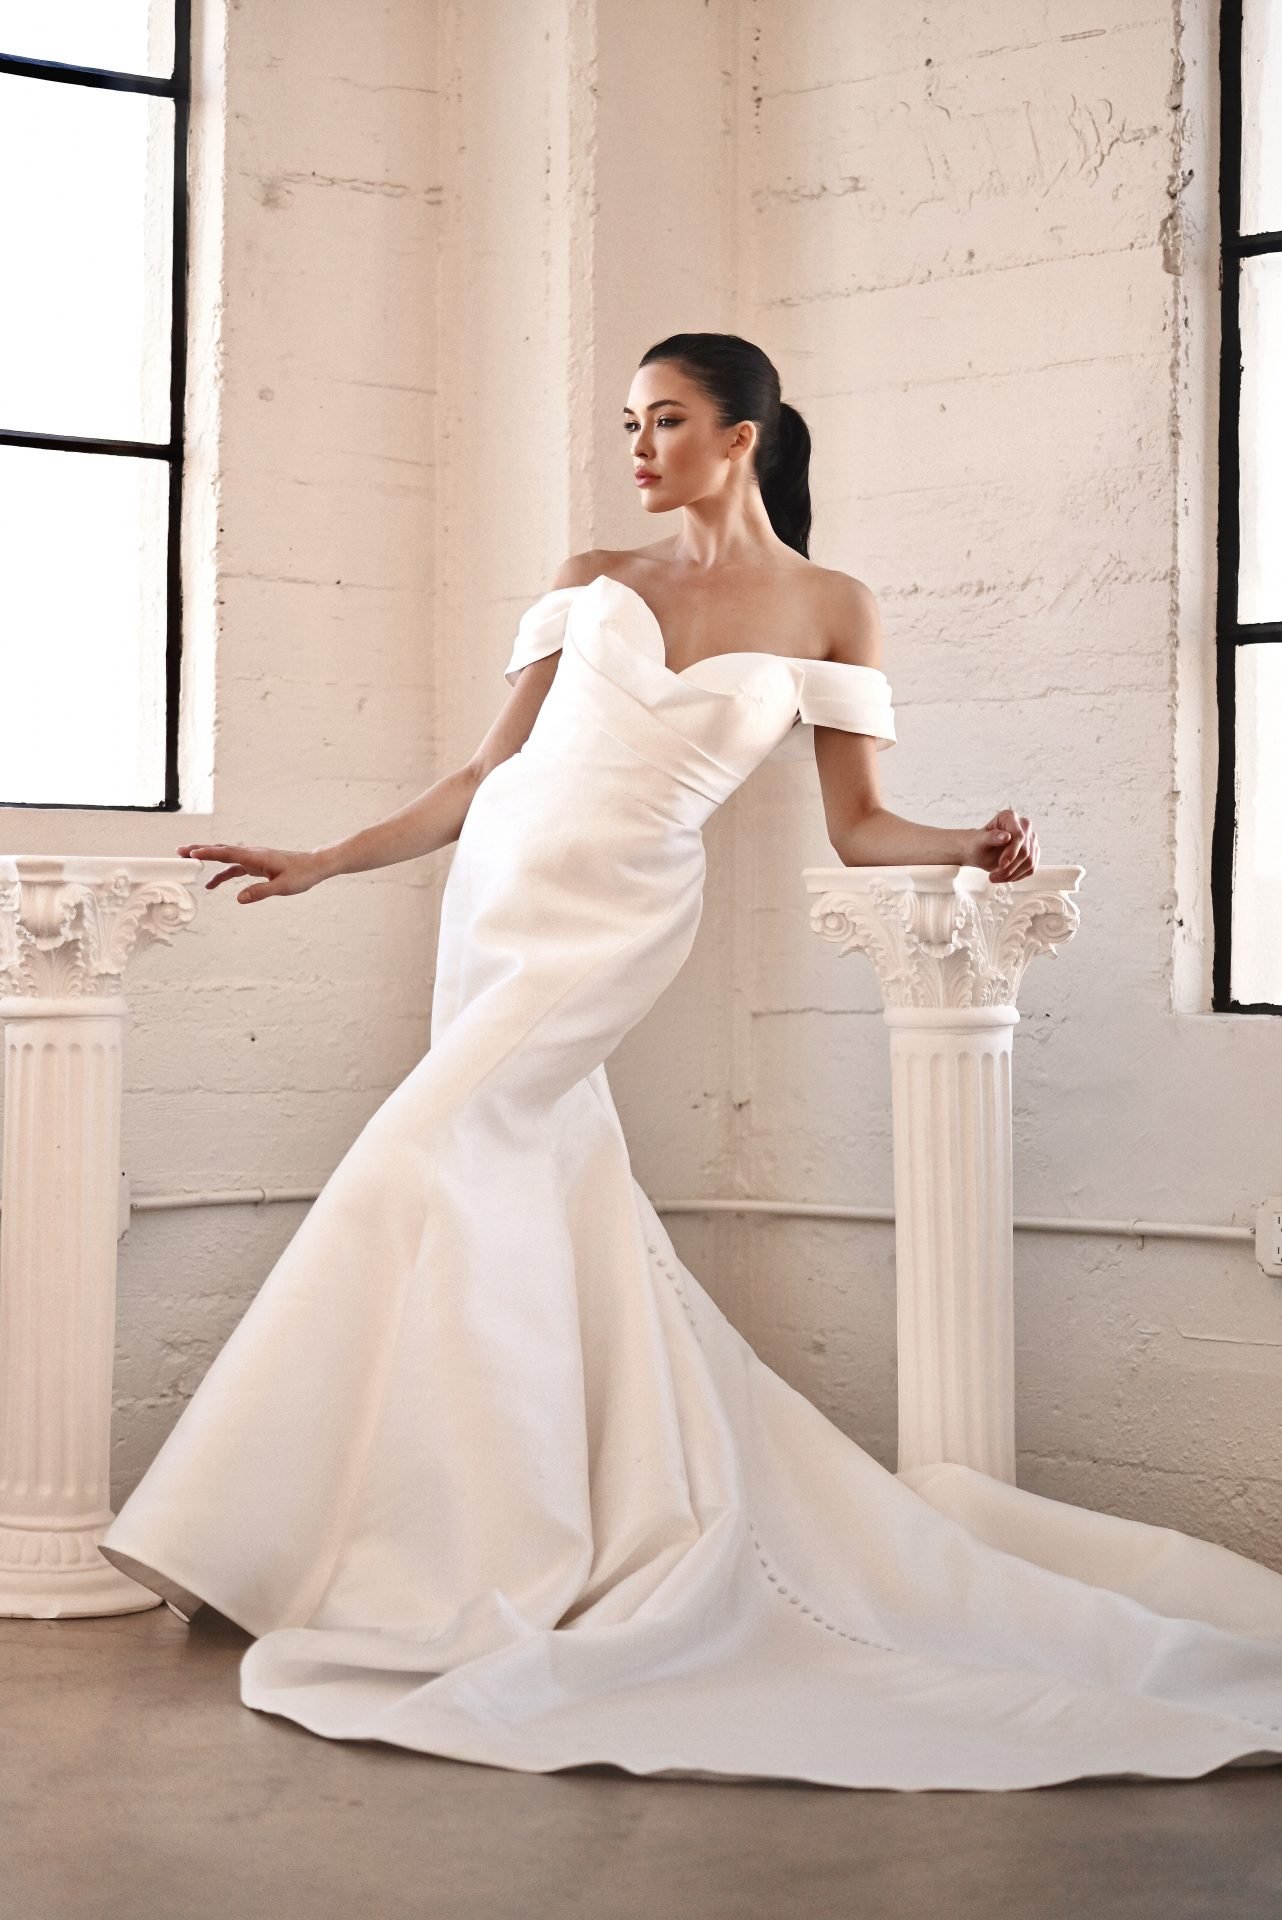 Zya Skirt Prea James | Bluebell Bridal | Wedding Dresses, Bridal Gowns